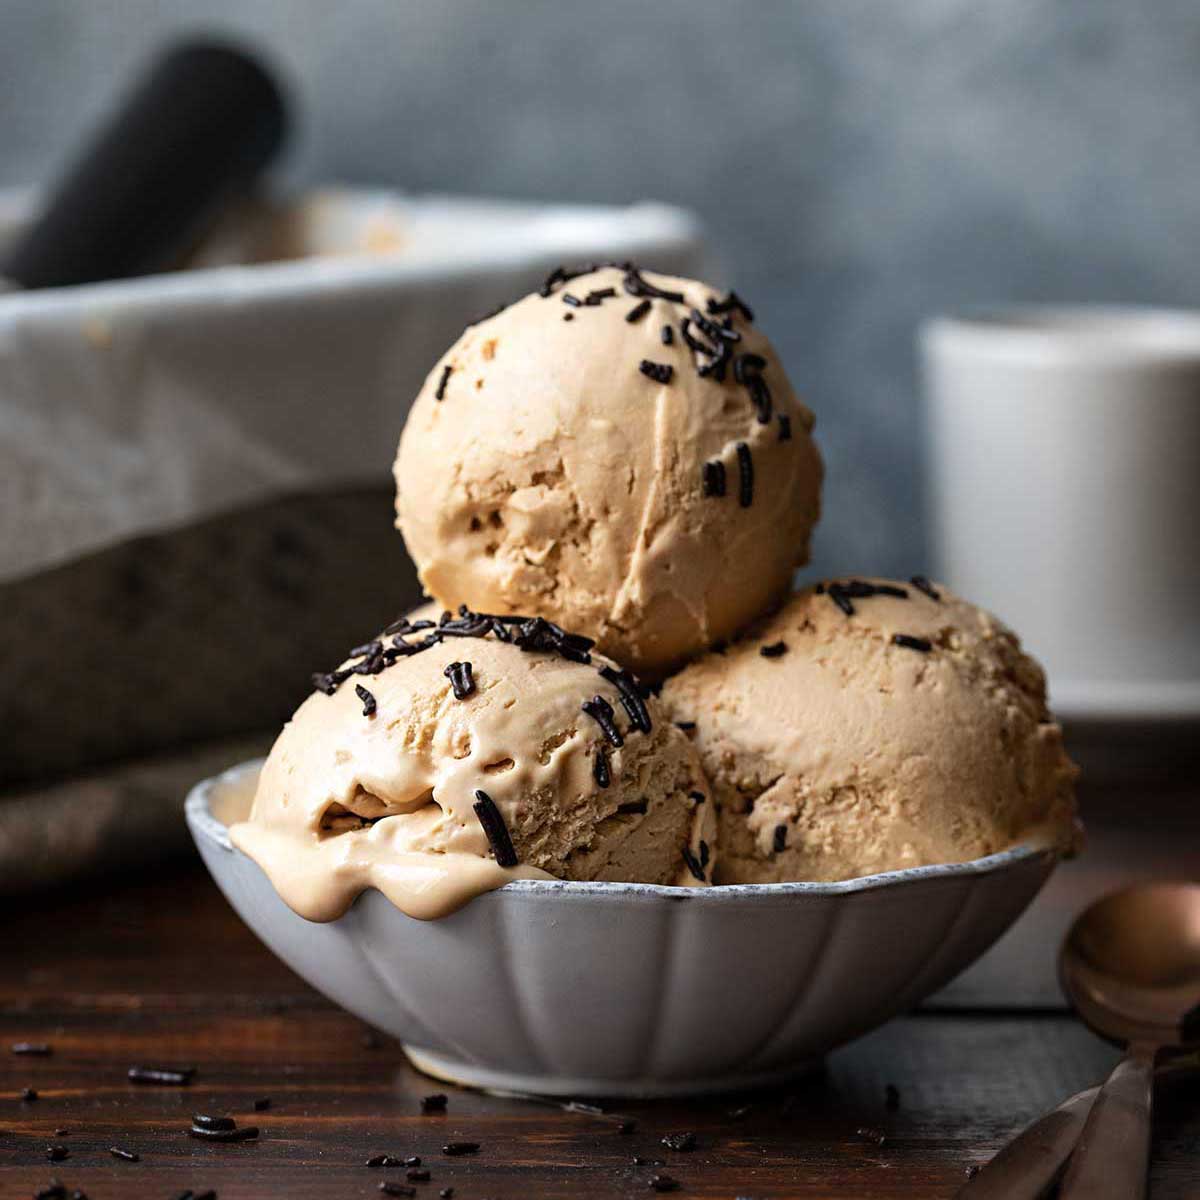 Easiest coffee ice cream recipe (no-churn, no eggs)